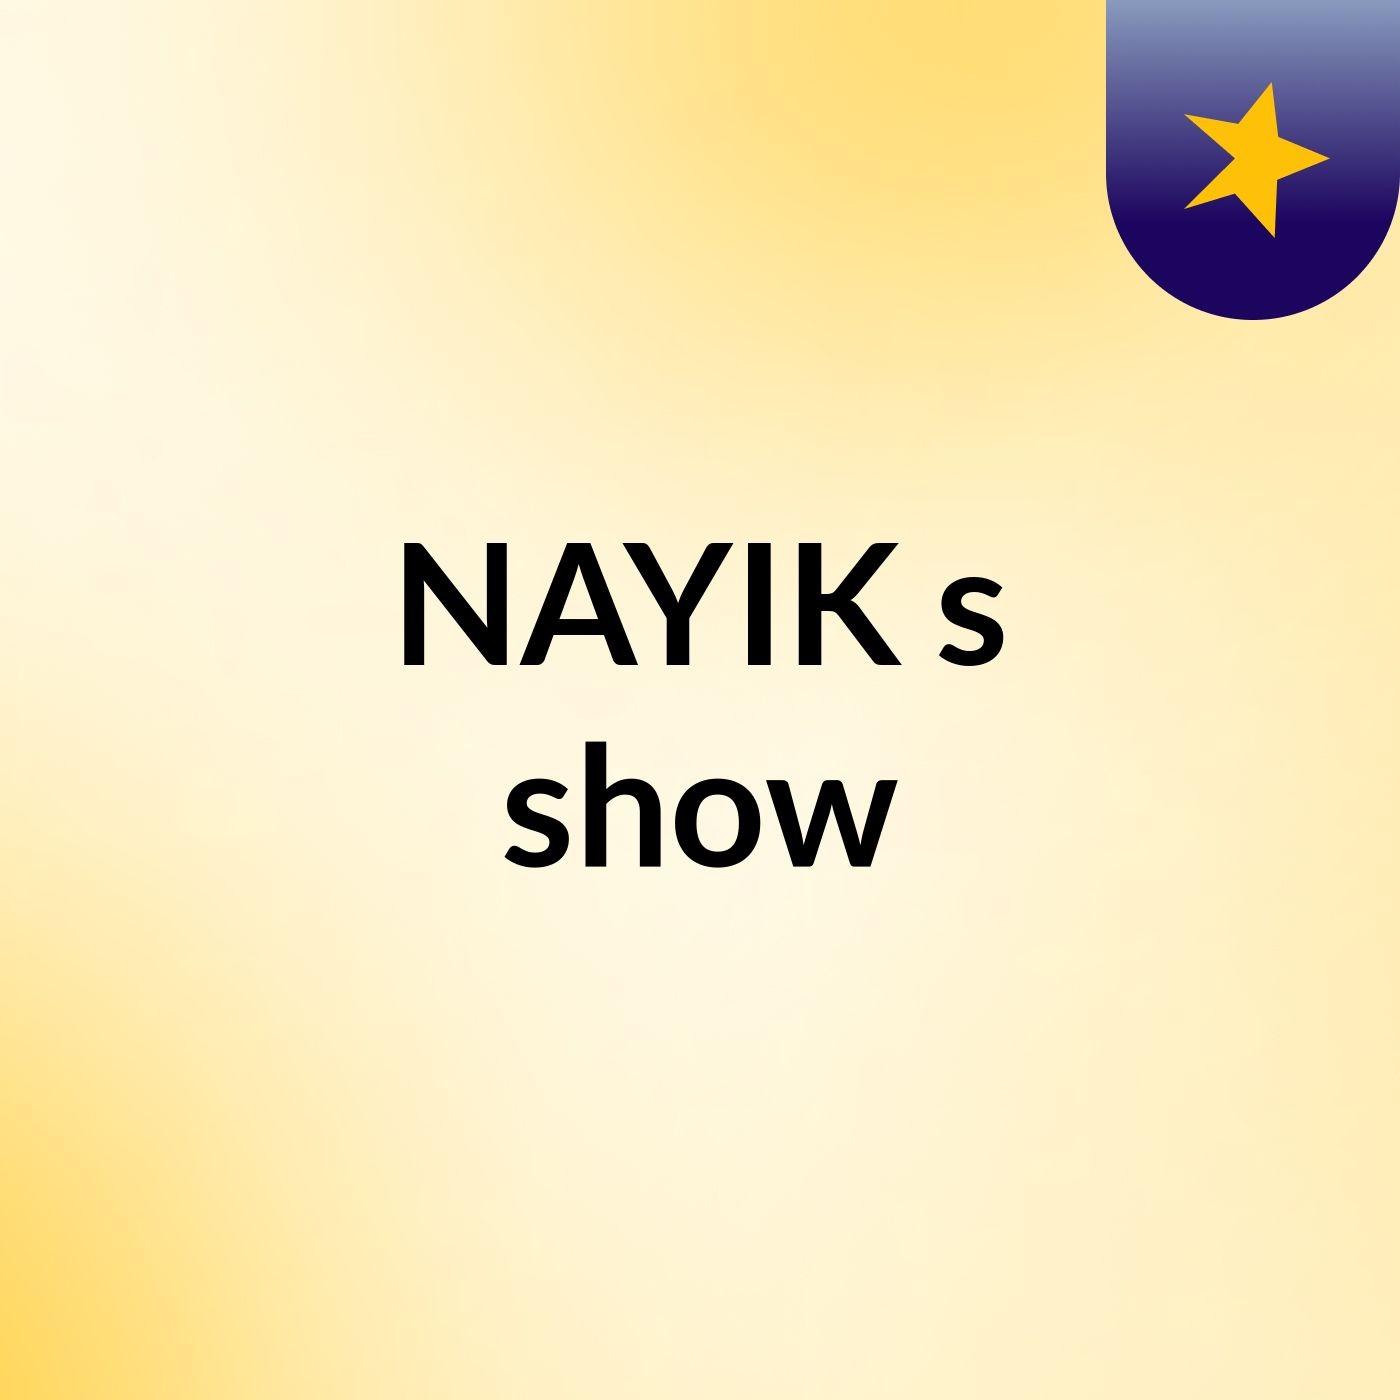 NAYIK's show